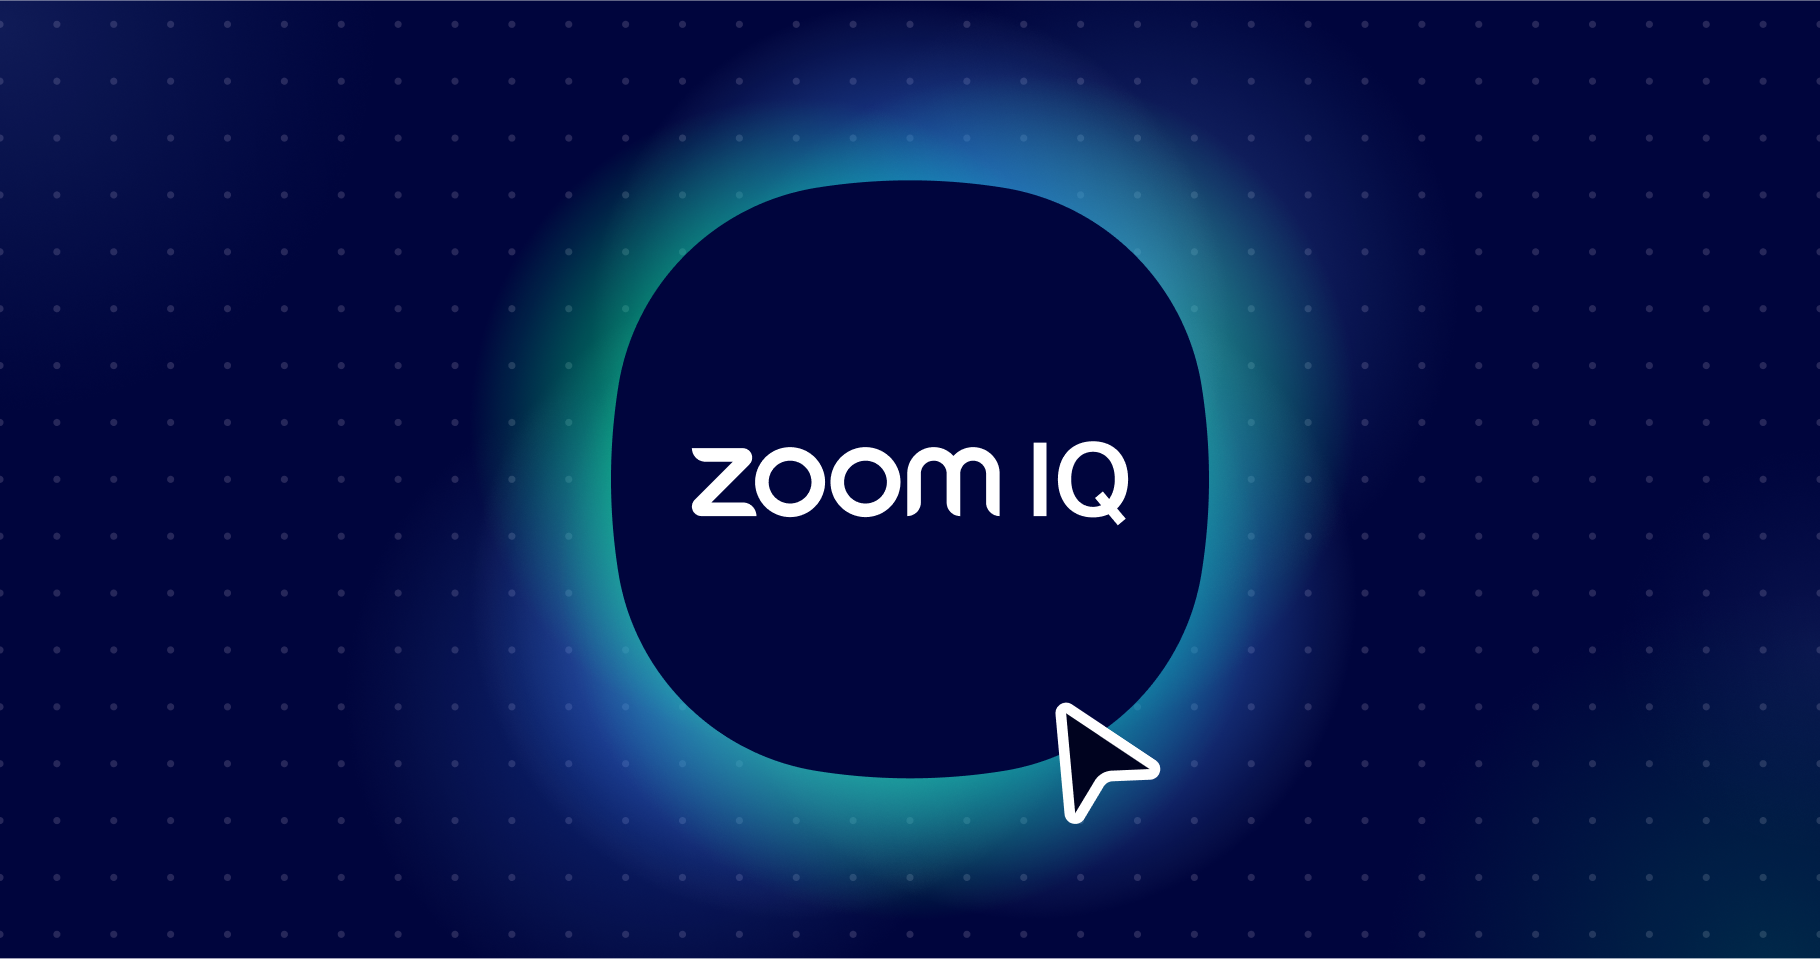 Visio : Zoom va résumer vos réunions grâce à l'IA